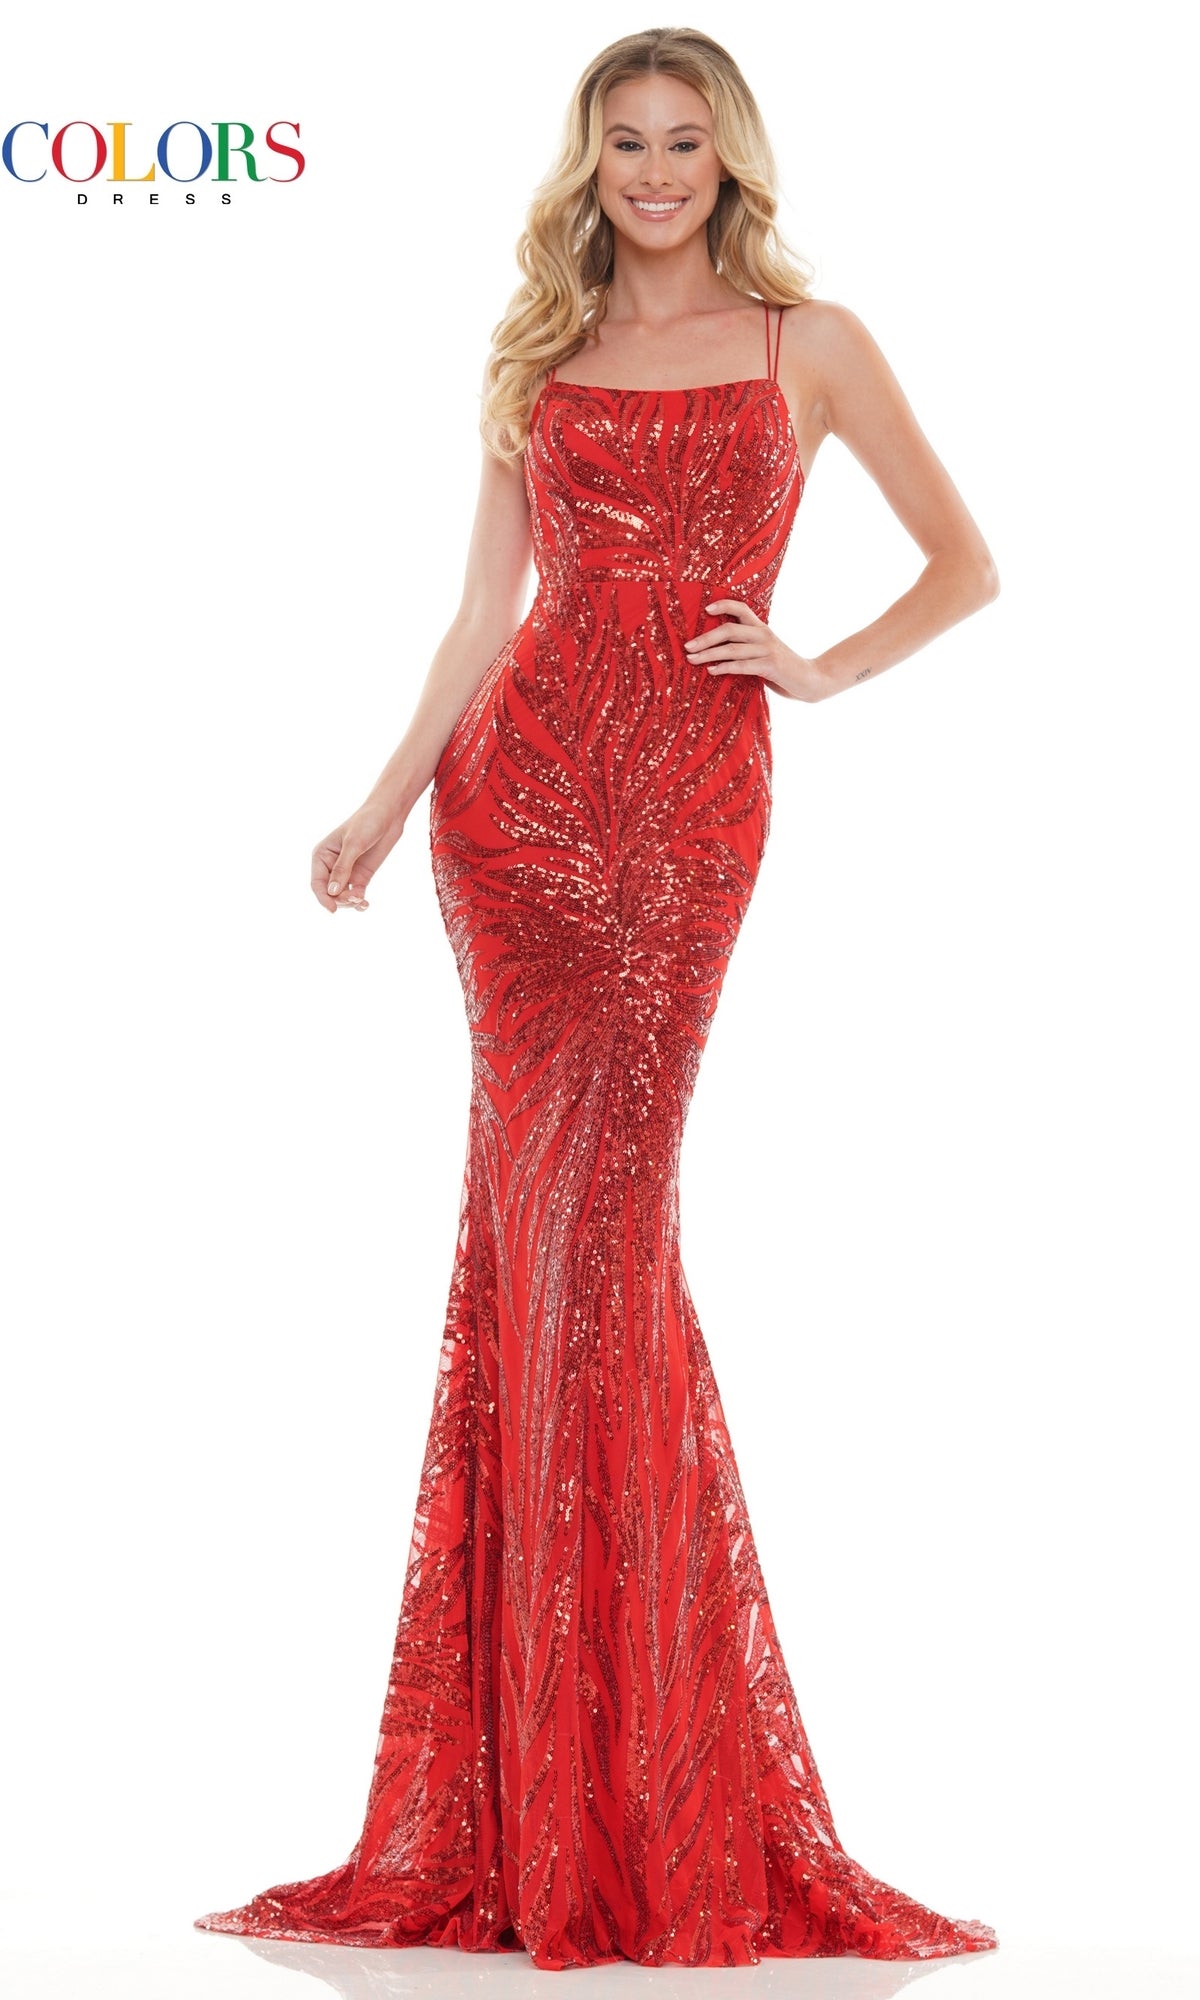 Sleek Sequin-Print Long Lace-Up Prom Dress 2743